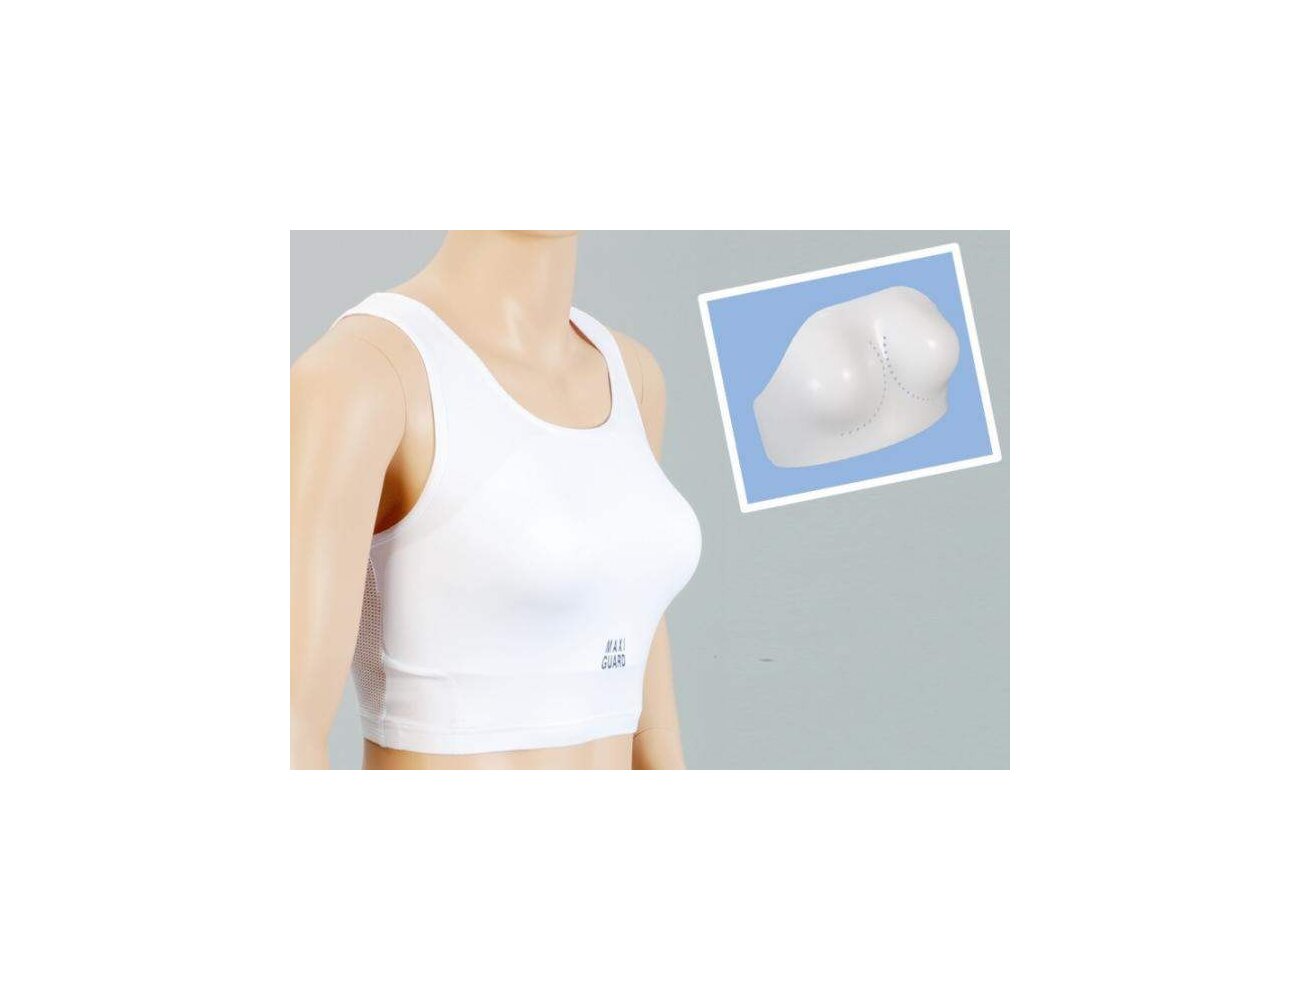 Damen Brustschutz / Schutzausrüstung / BAY-KAMPFSPORT, 35,90